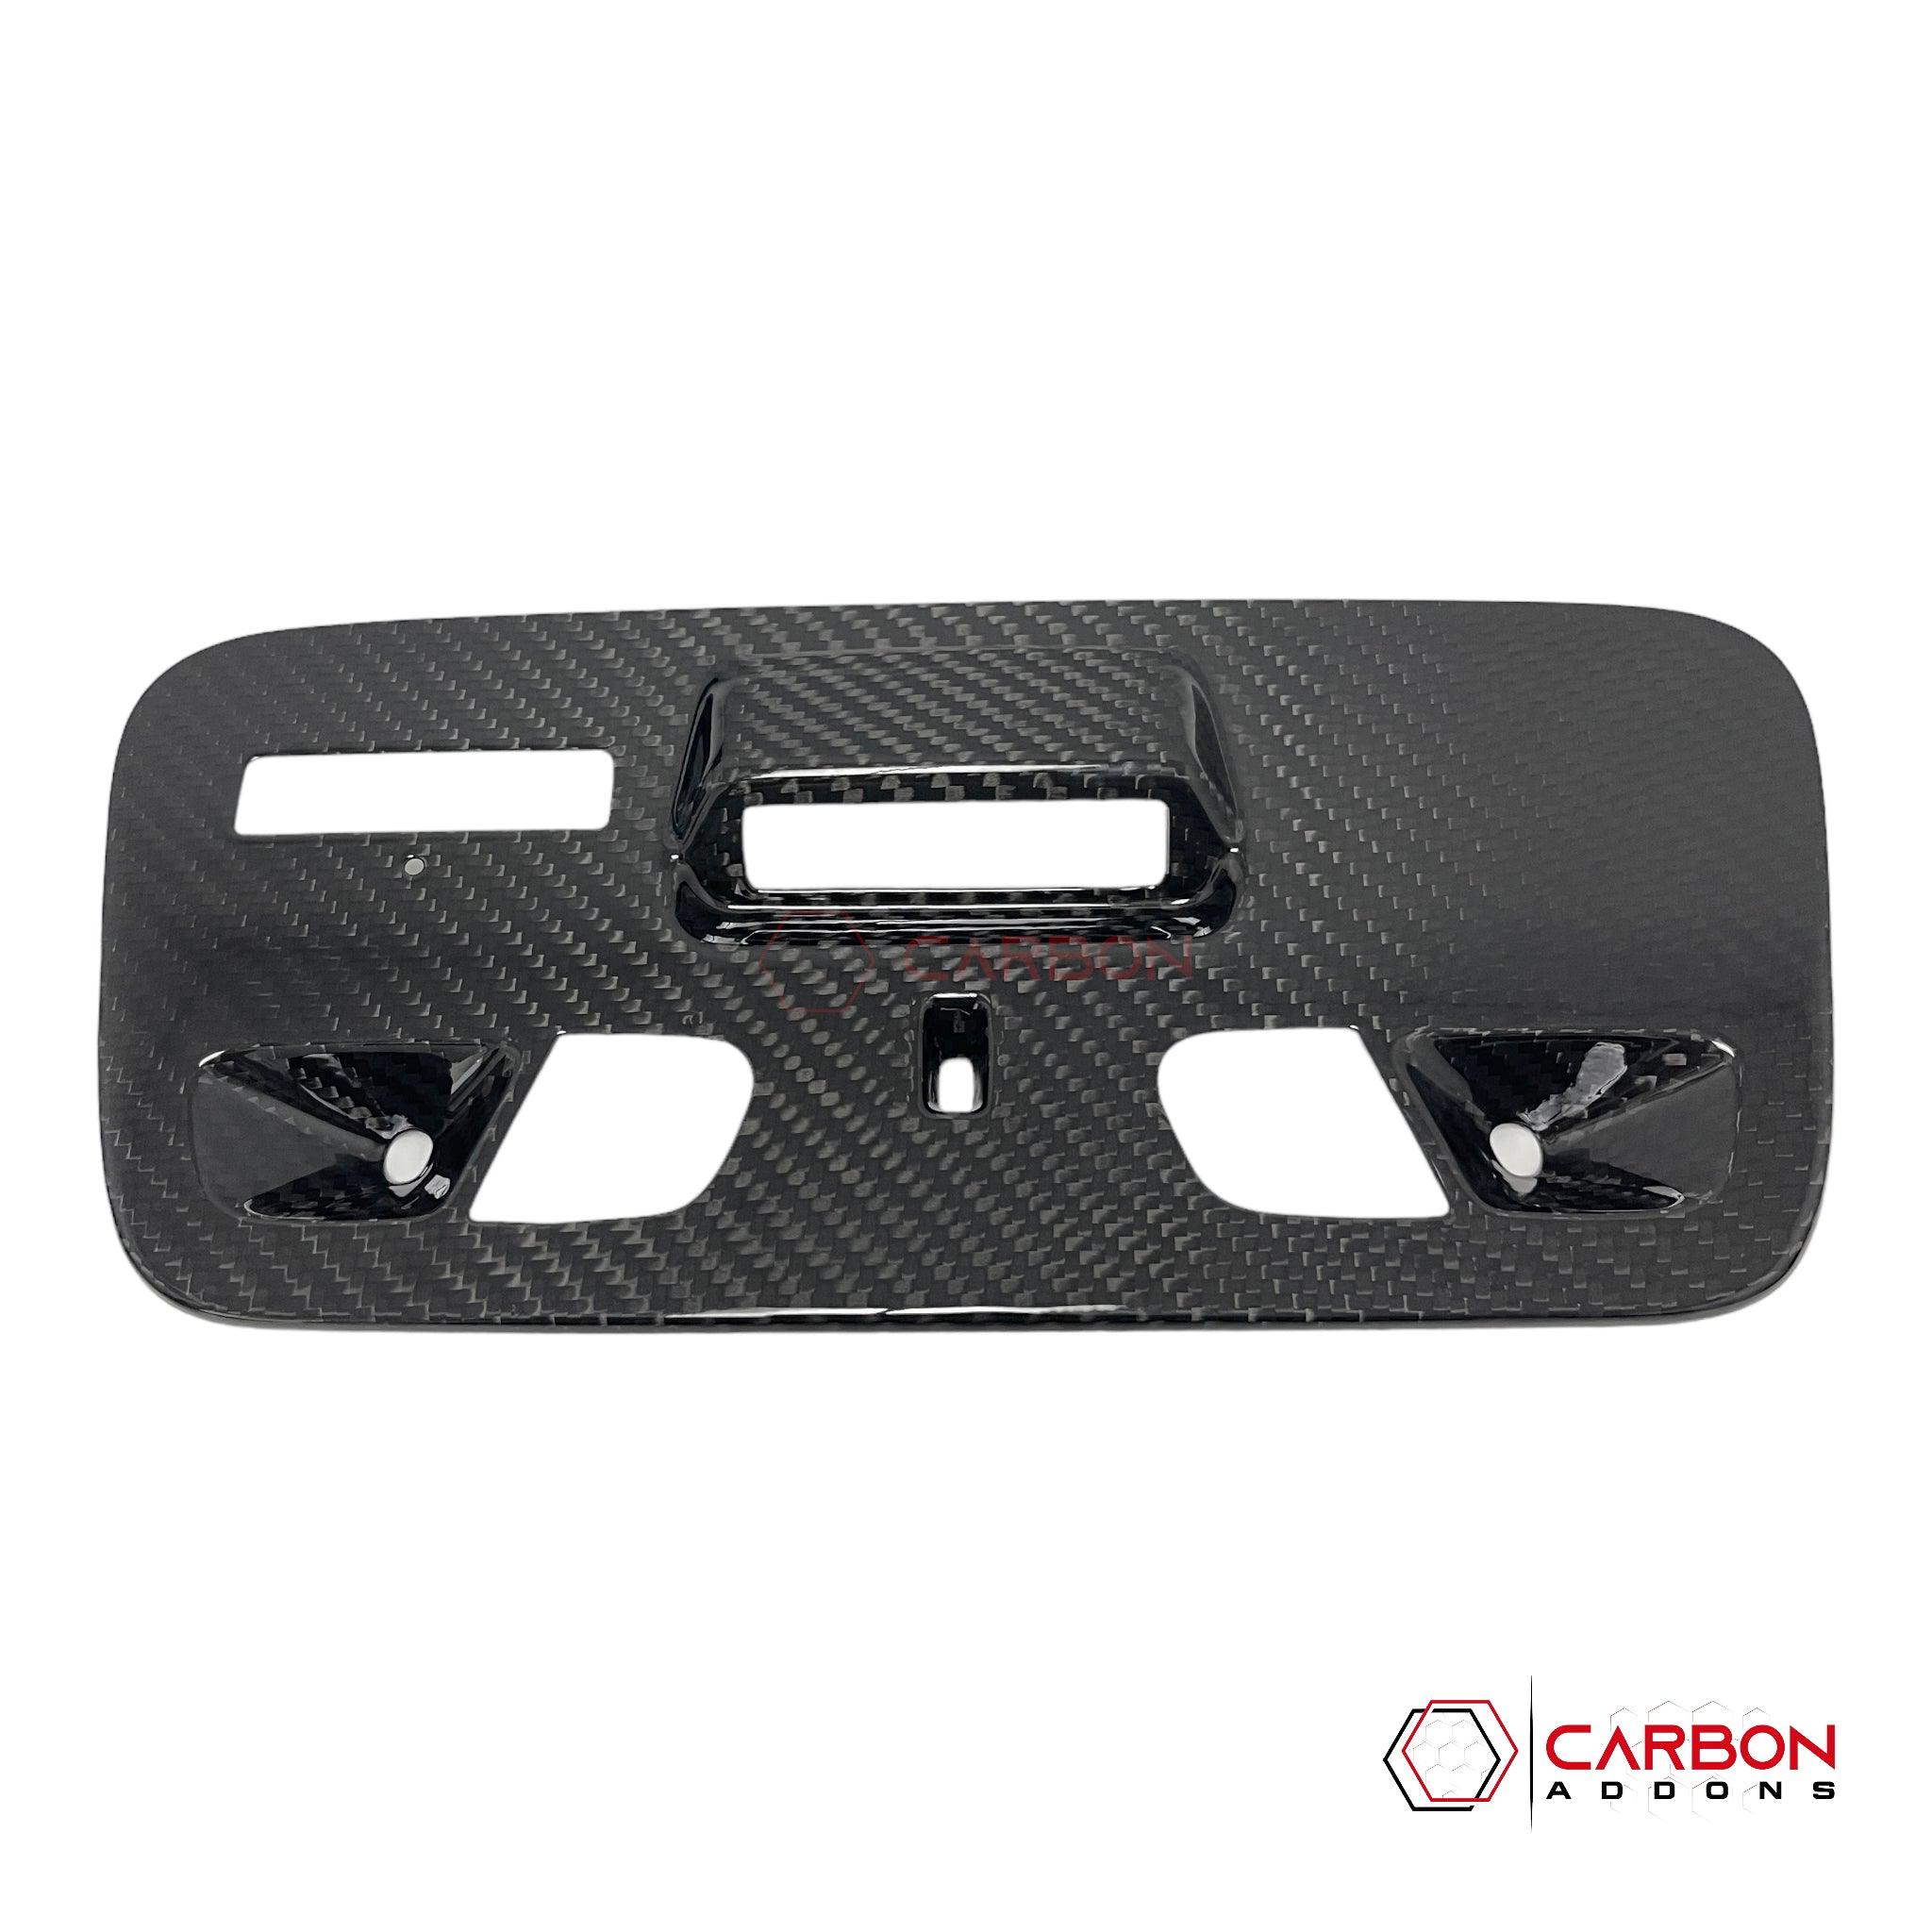 2016–2018 Camaro Real Carbon Fiber Over Head Dome Light Trim Covers - carbonaddons Carbon Fiber Parts, Accessories, Upgrades, Mods